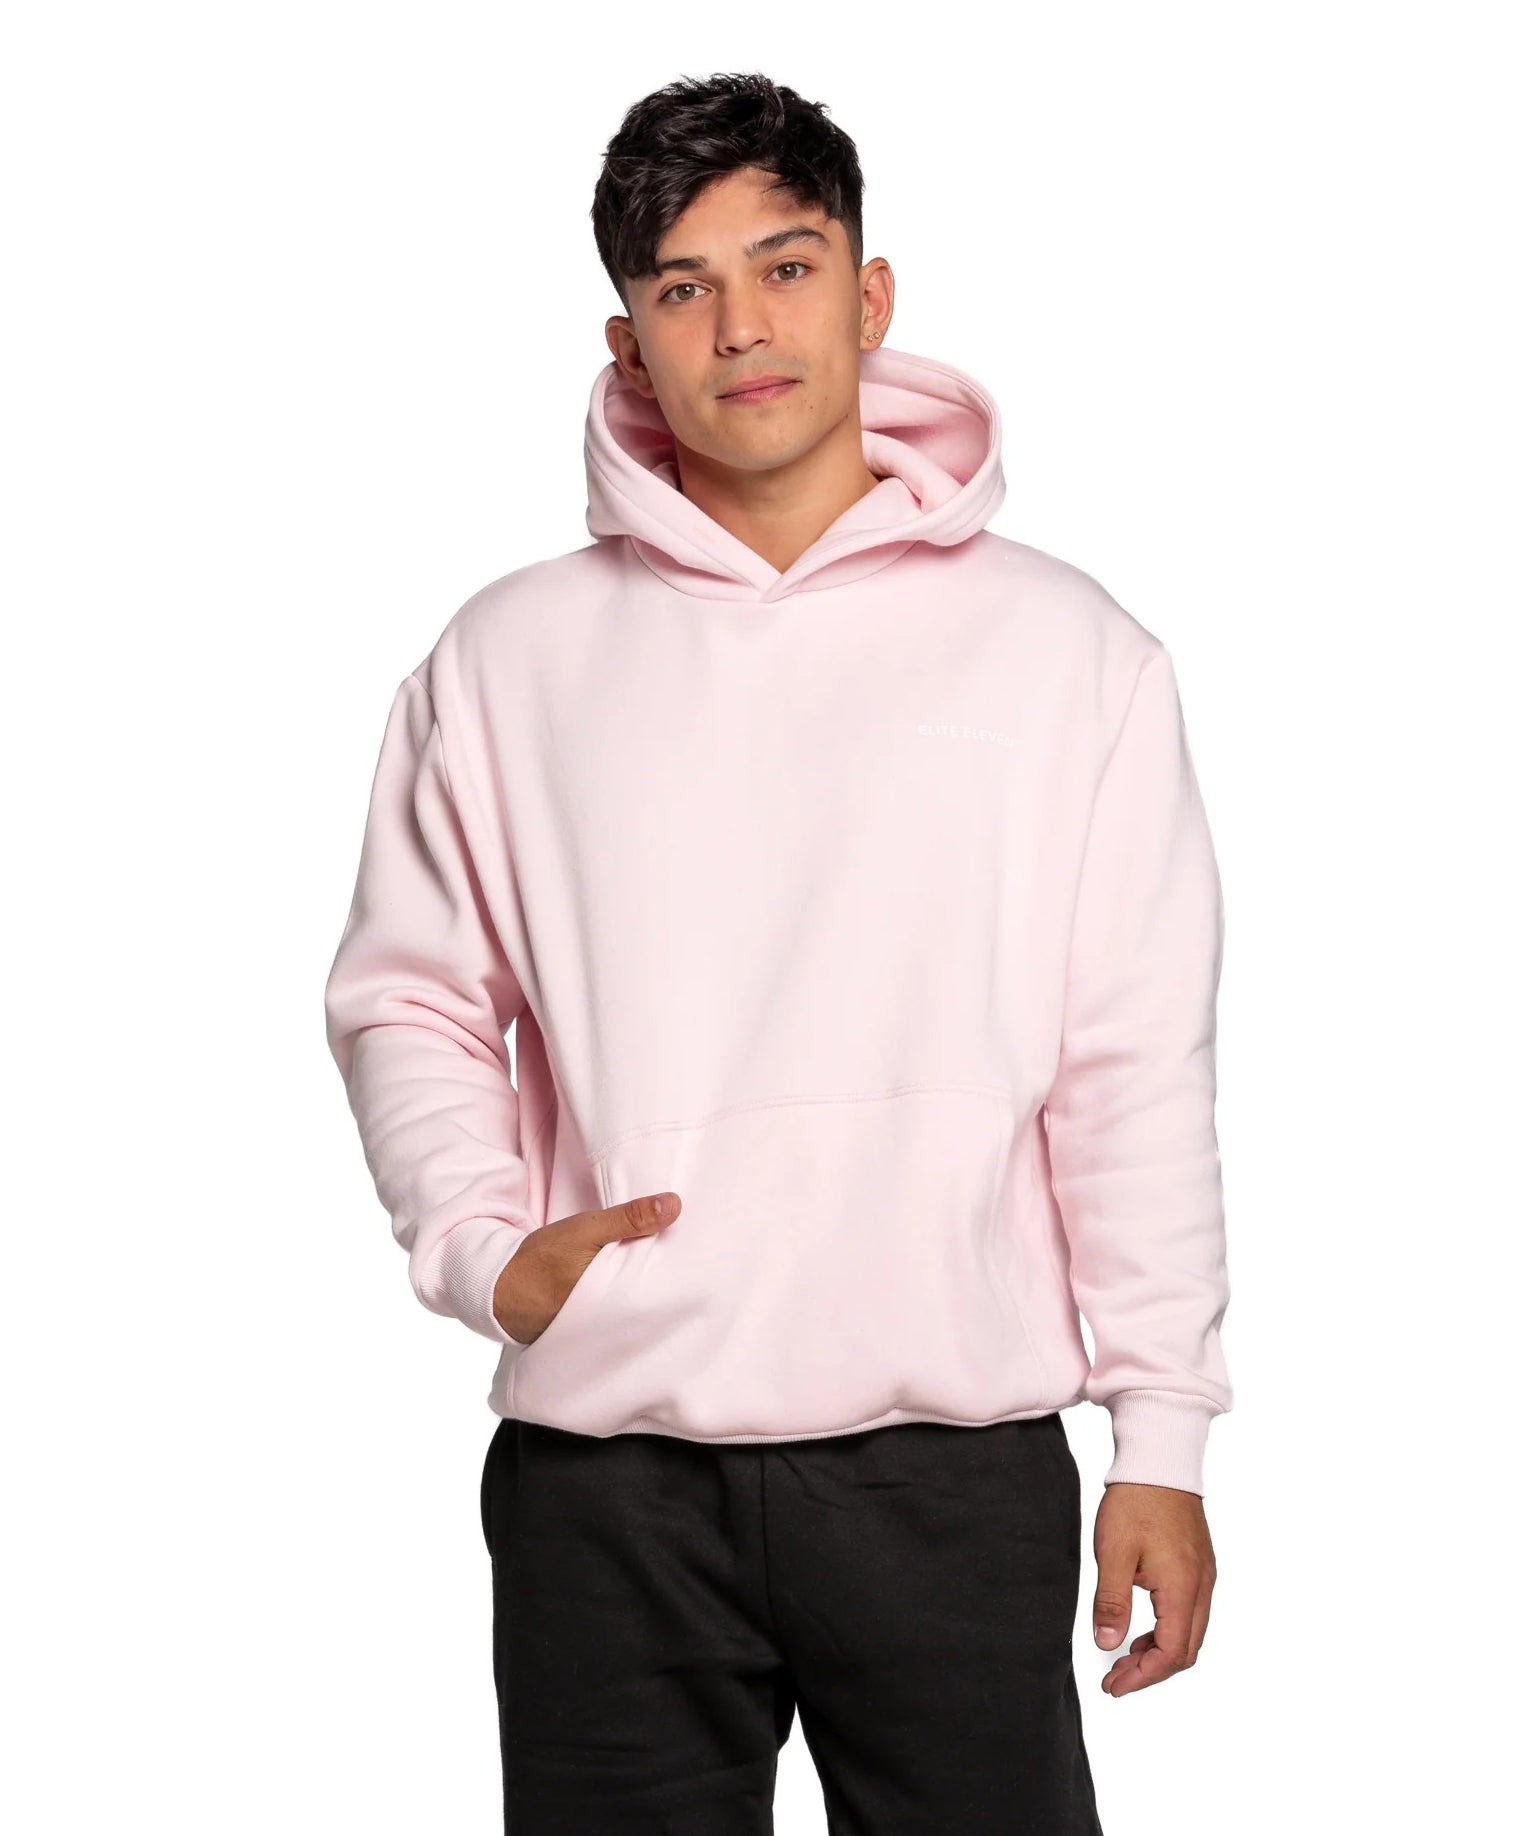 Premium Plain Cotton Baby Pink or Soft Pink Hoodie/Sweatshirt